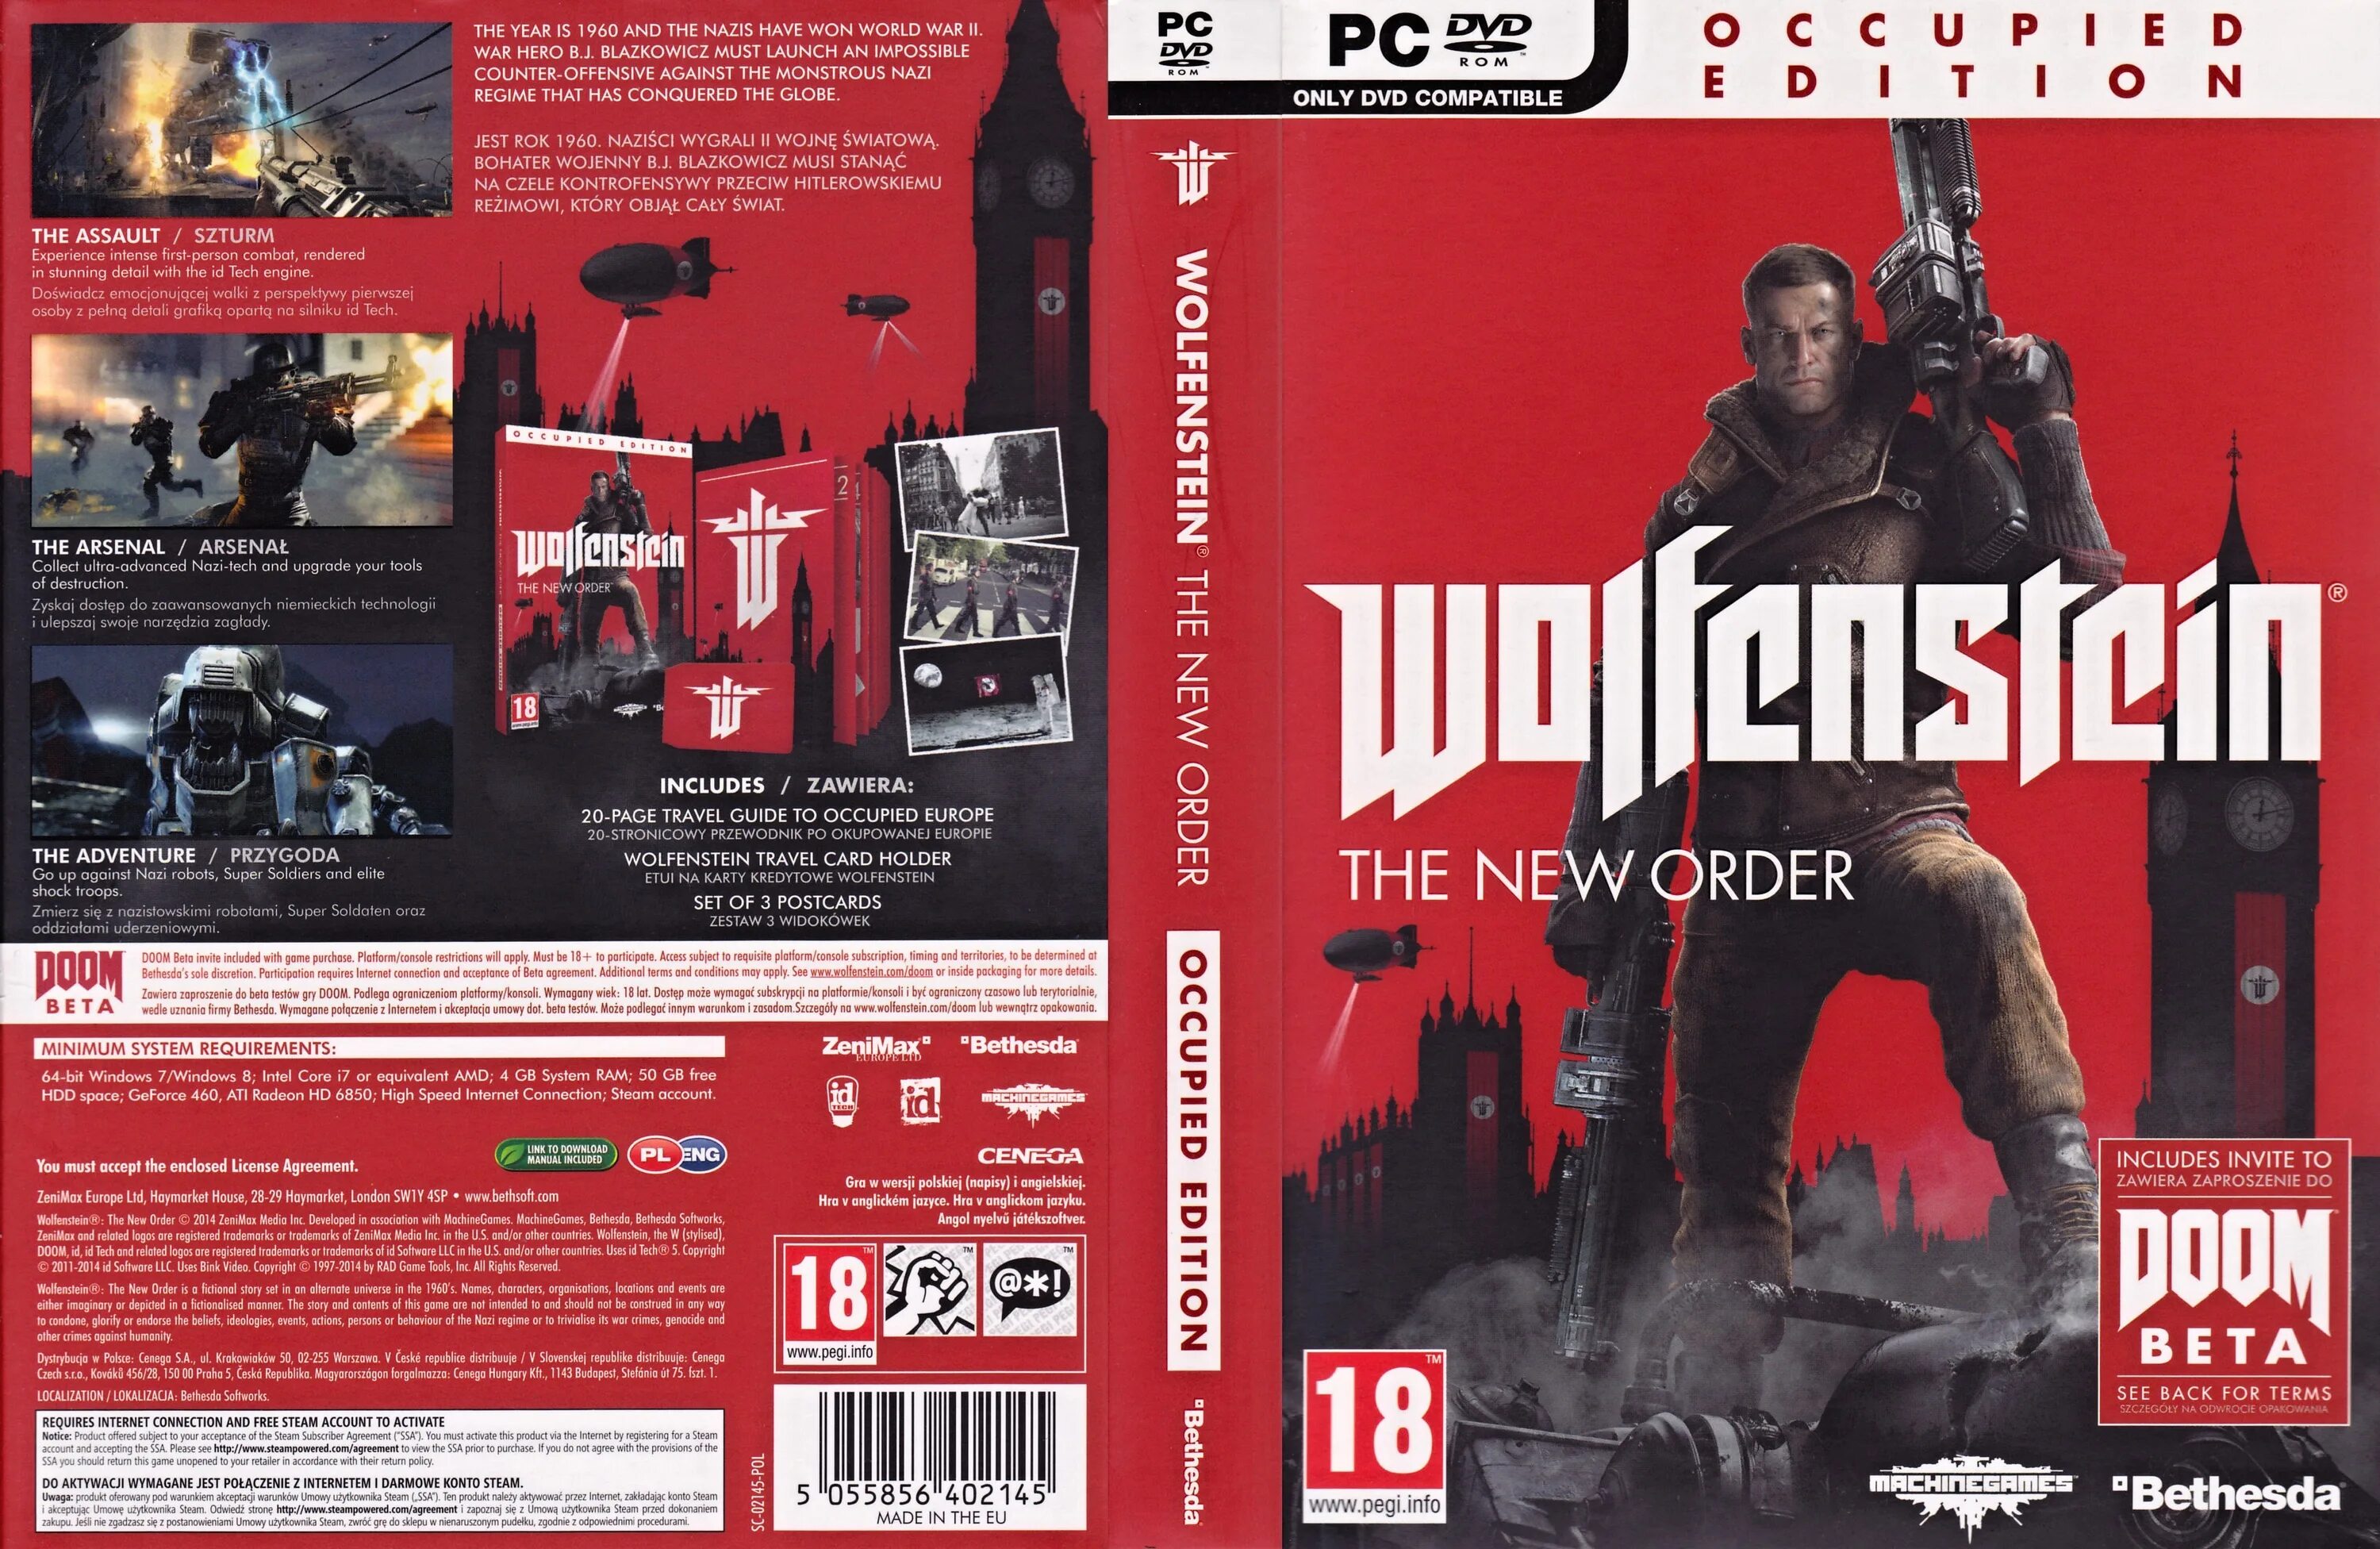 The new order требования. Wolfenstein the New order диск ПК. Обложка диска Wolfenstein PC. Wolfenstein the New order обложка игры. Wolfenstein 2009 диск PC.